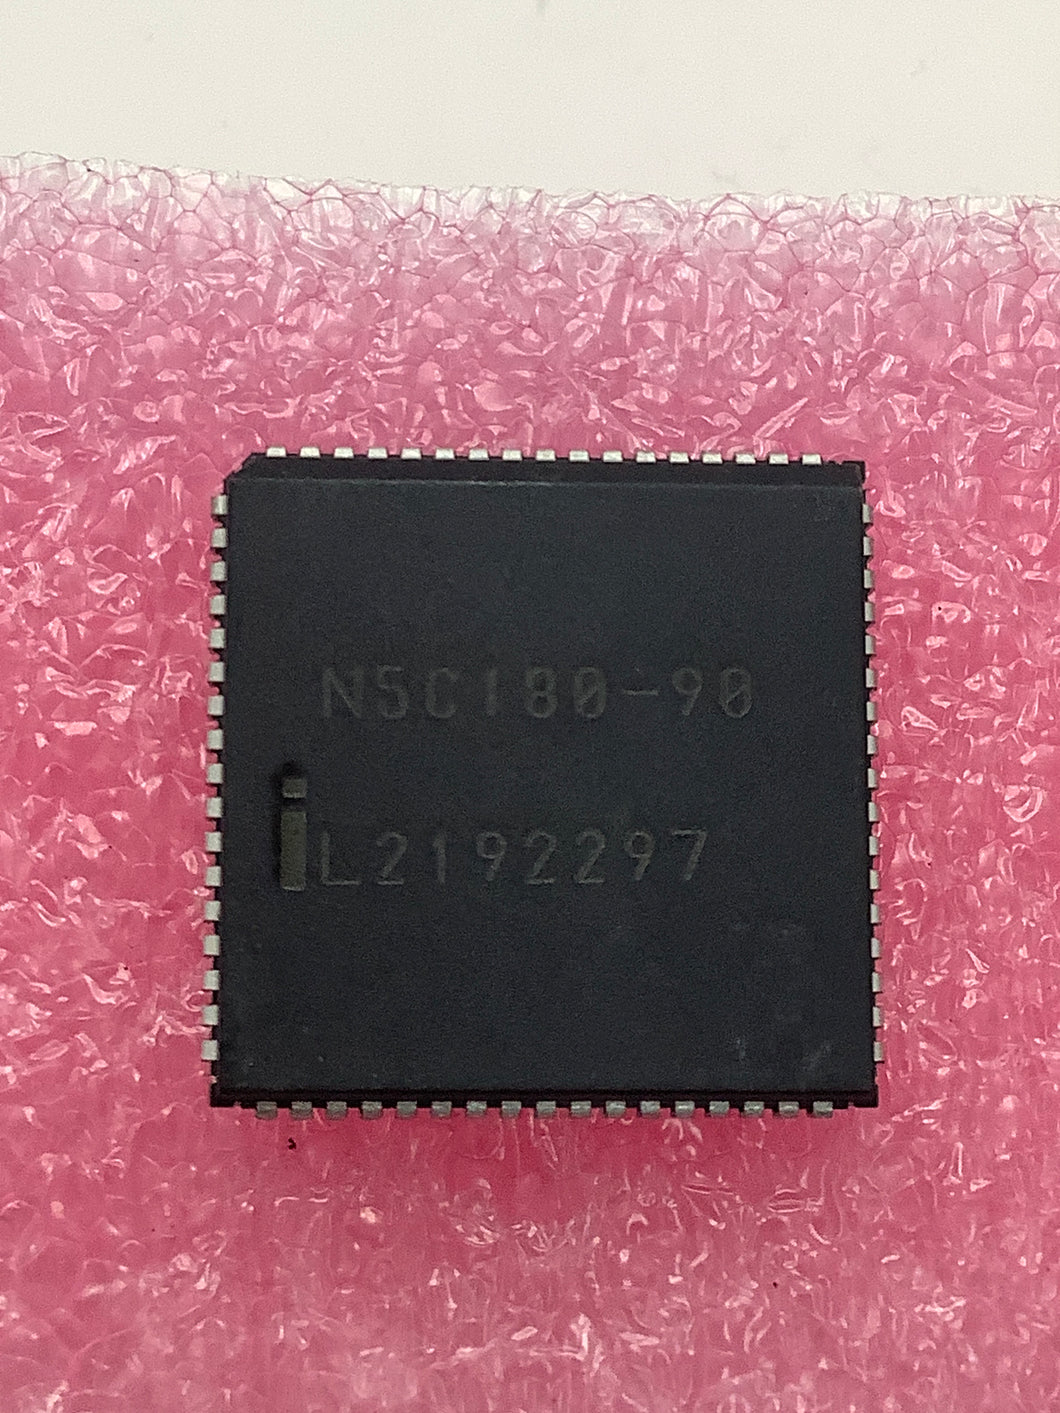 N5C180-90 - INTEL - Programmable Logic ICs